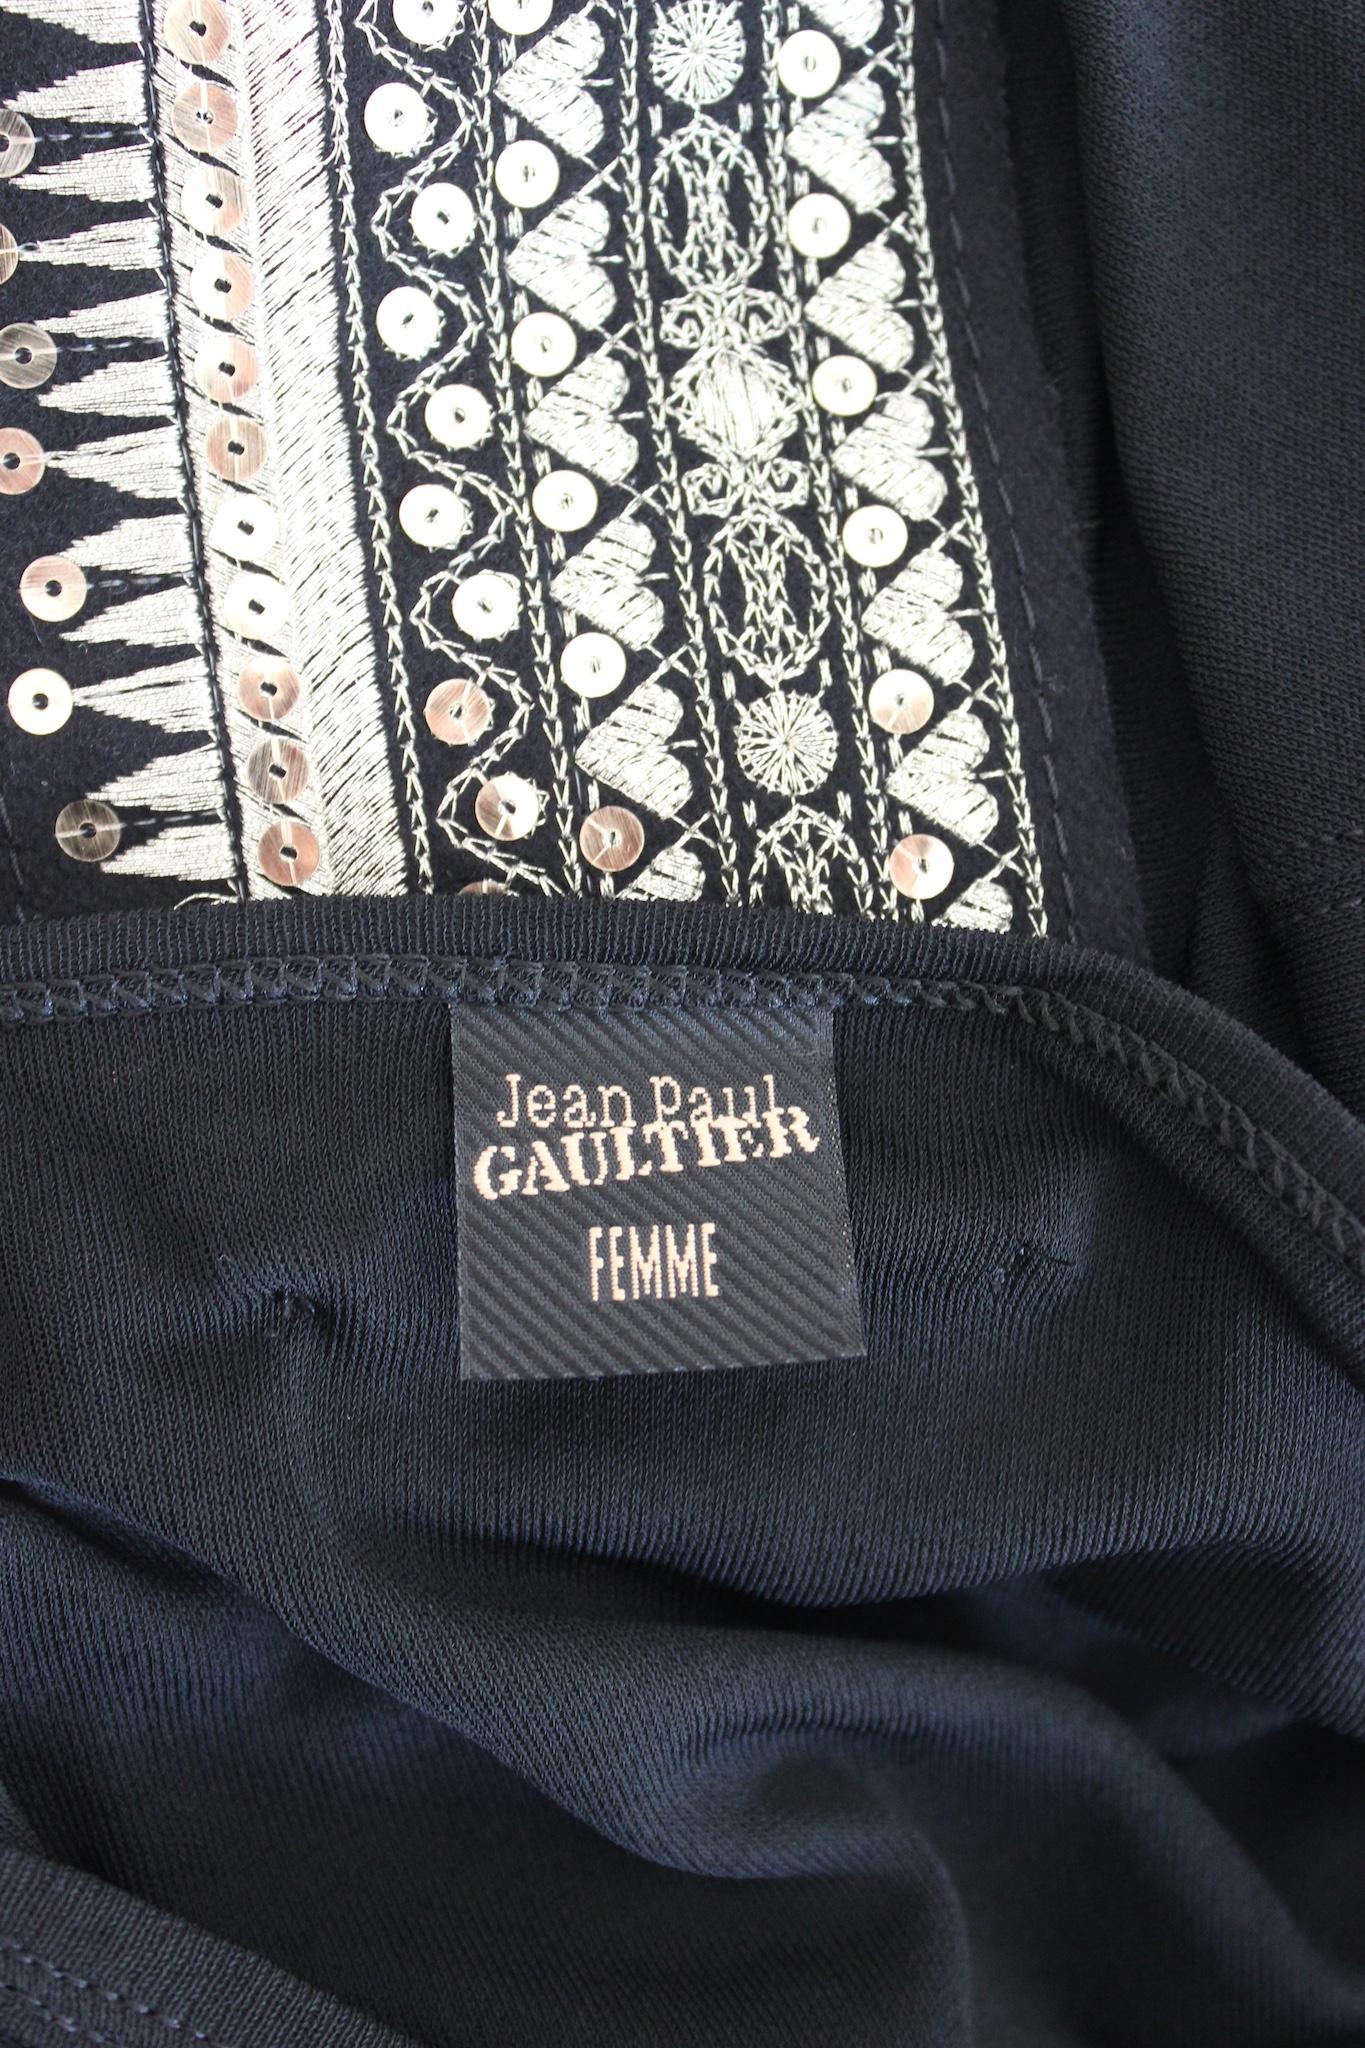 Jean Paul Gaultier Black Gold Sequins Leather T Shirt 2000s For Sale 3